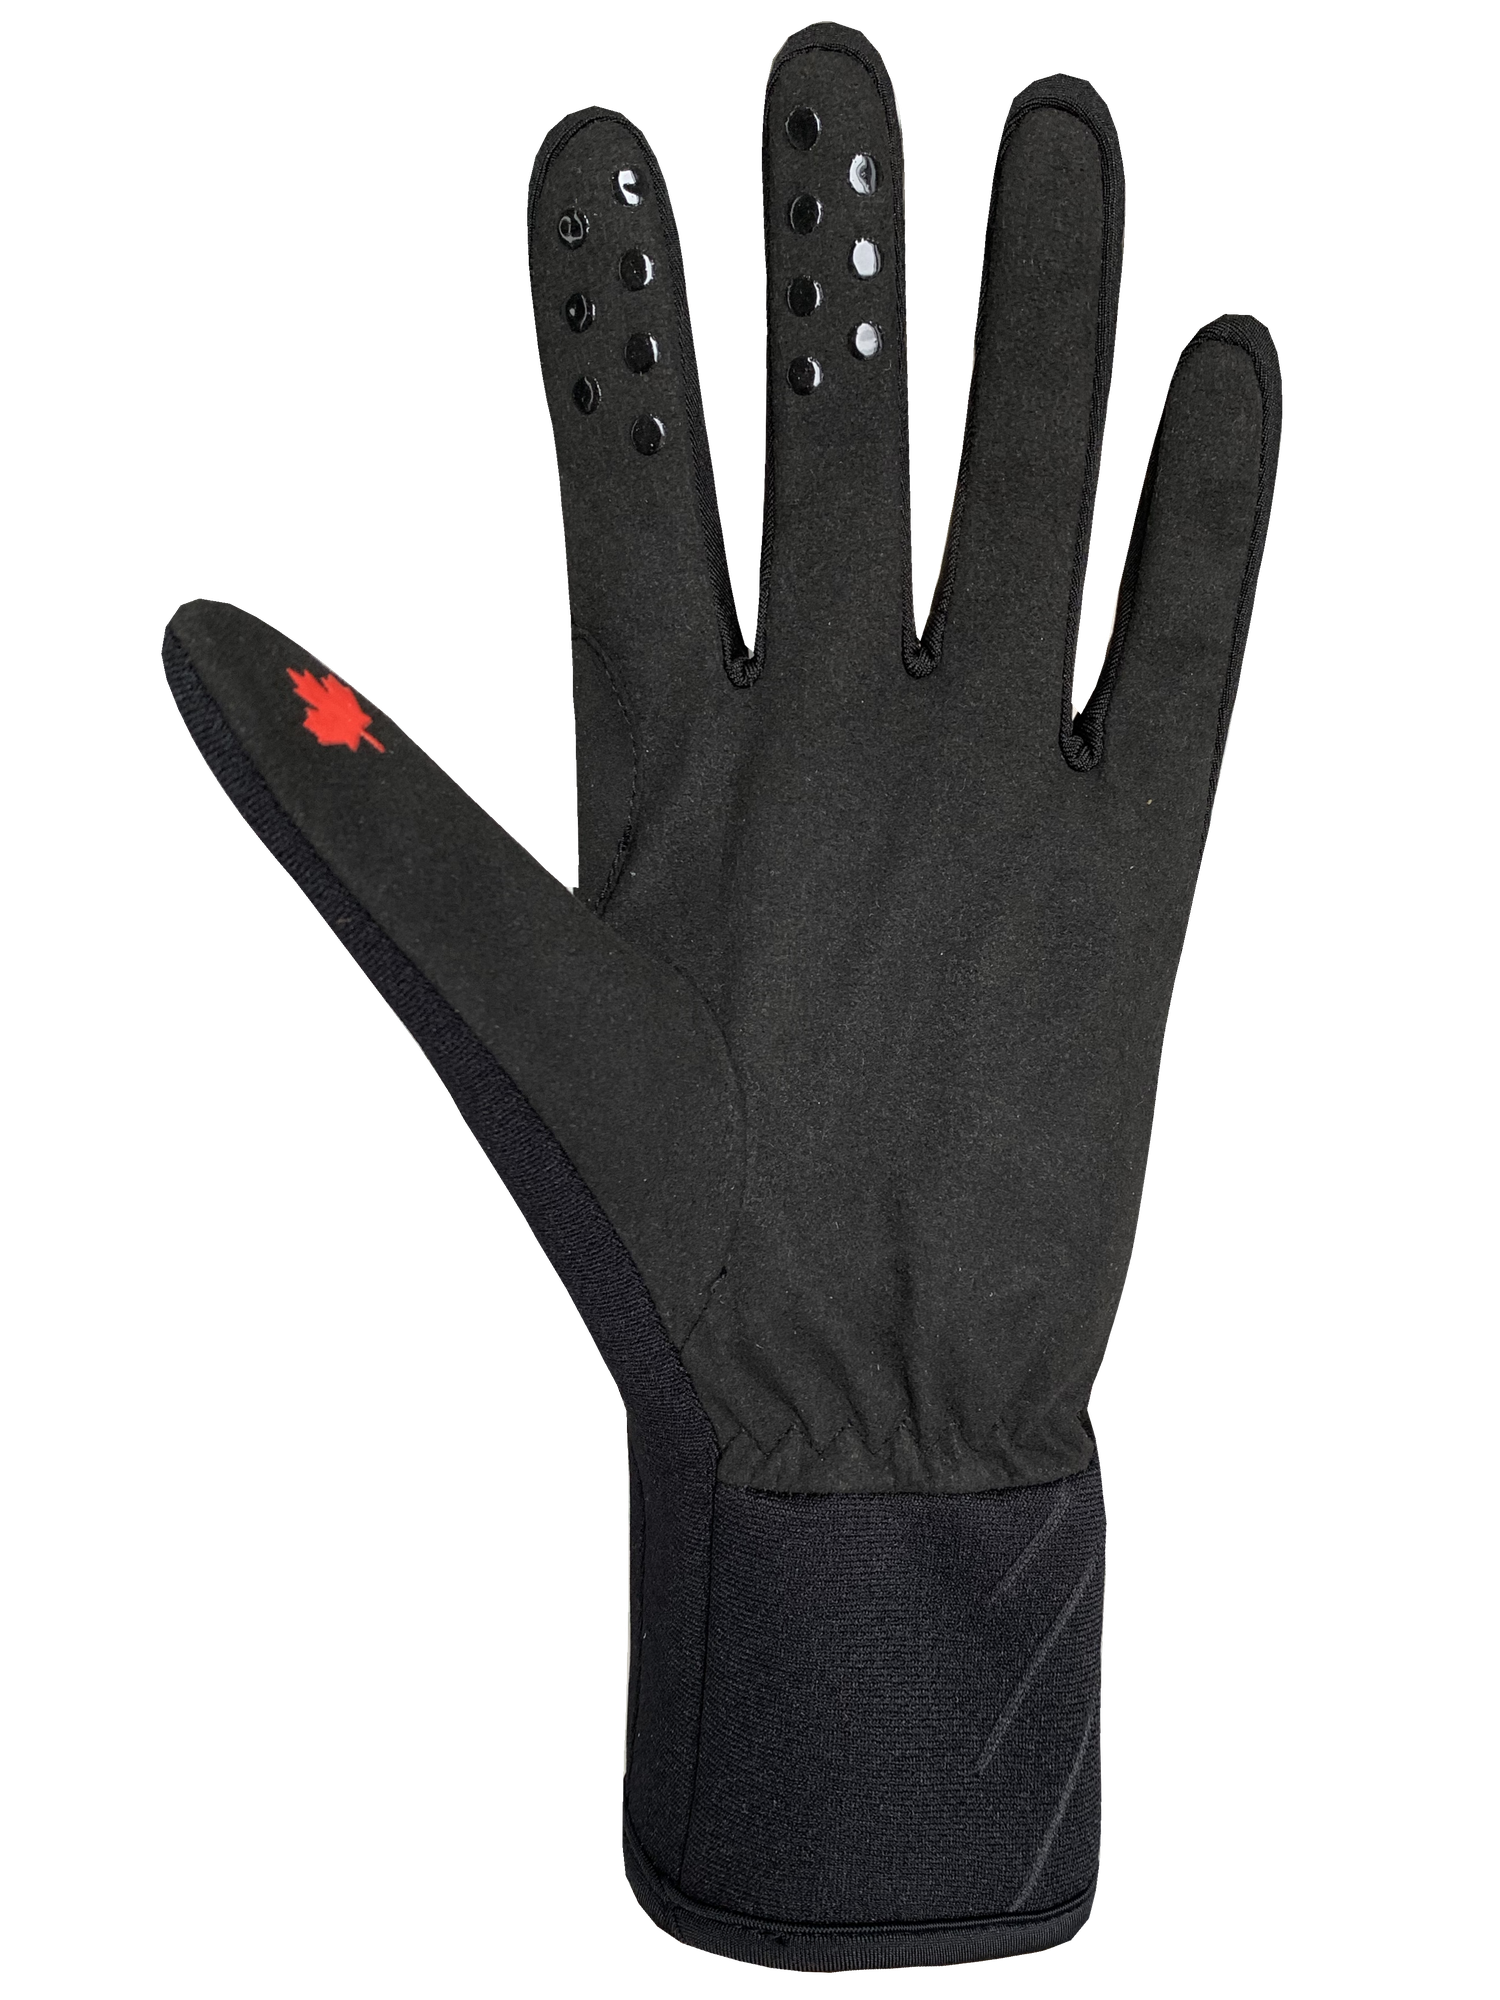 Maple Leaf Neo Gloves - Women, Black/Red/White